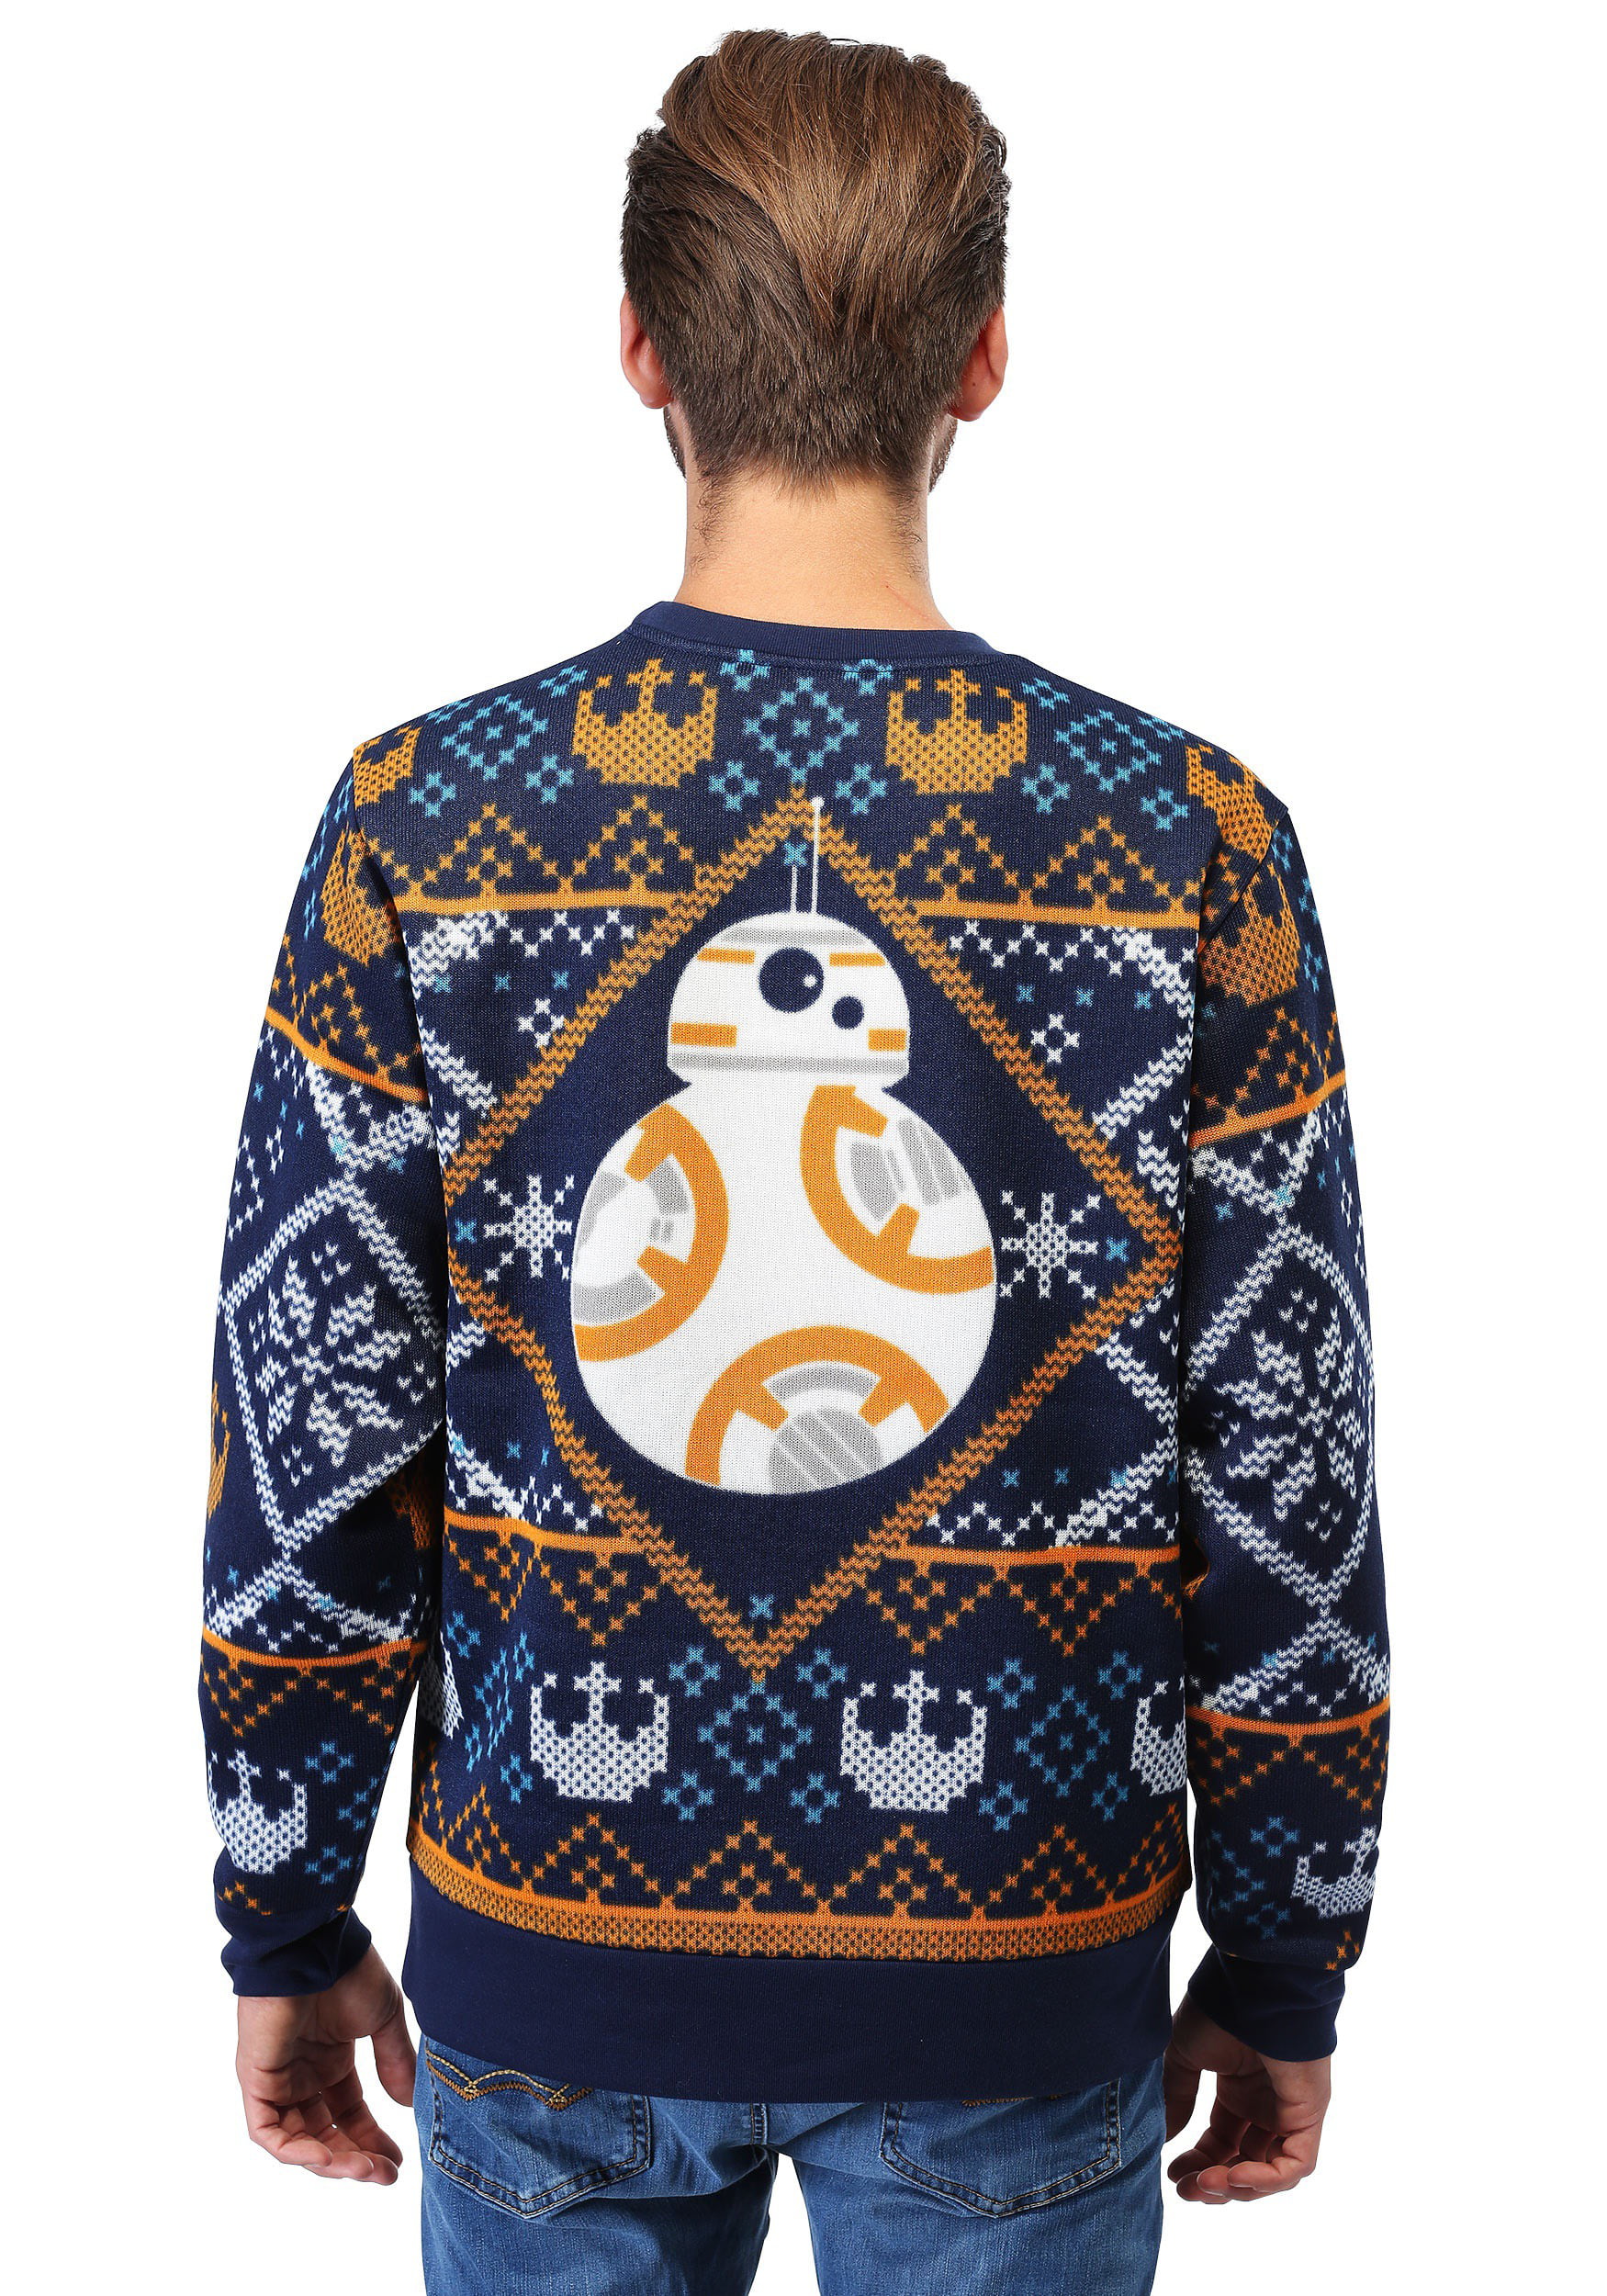 christmas sweater star wars